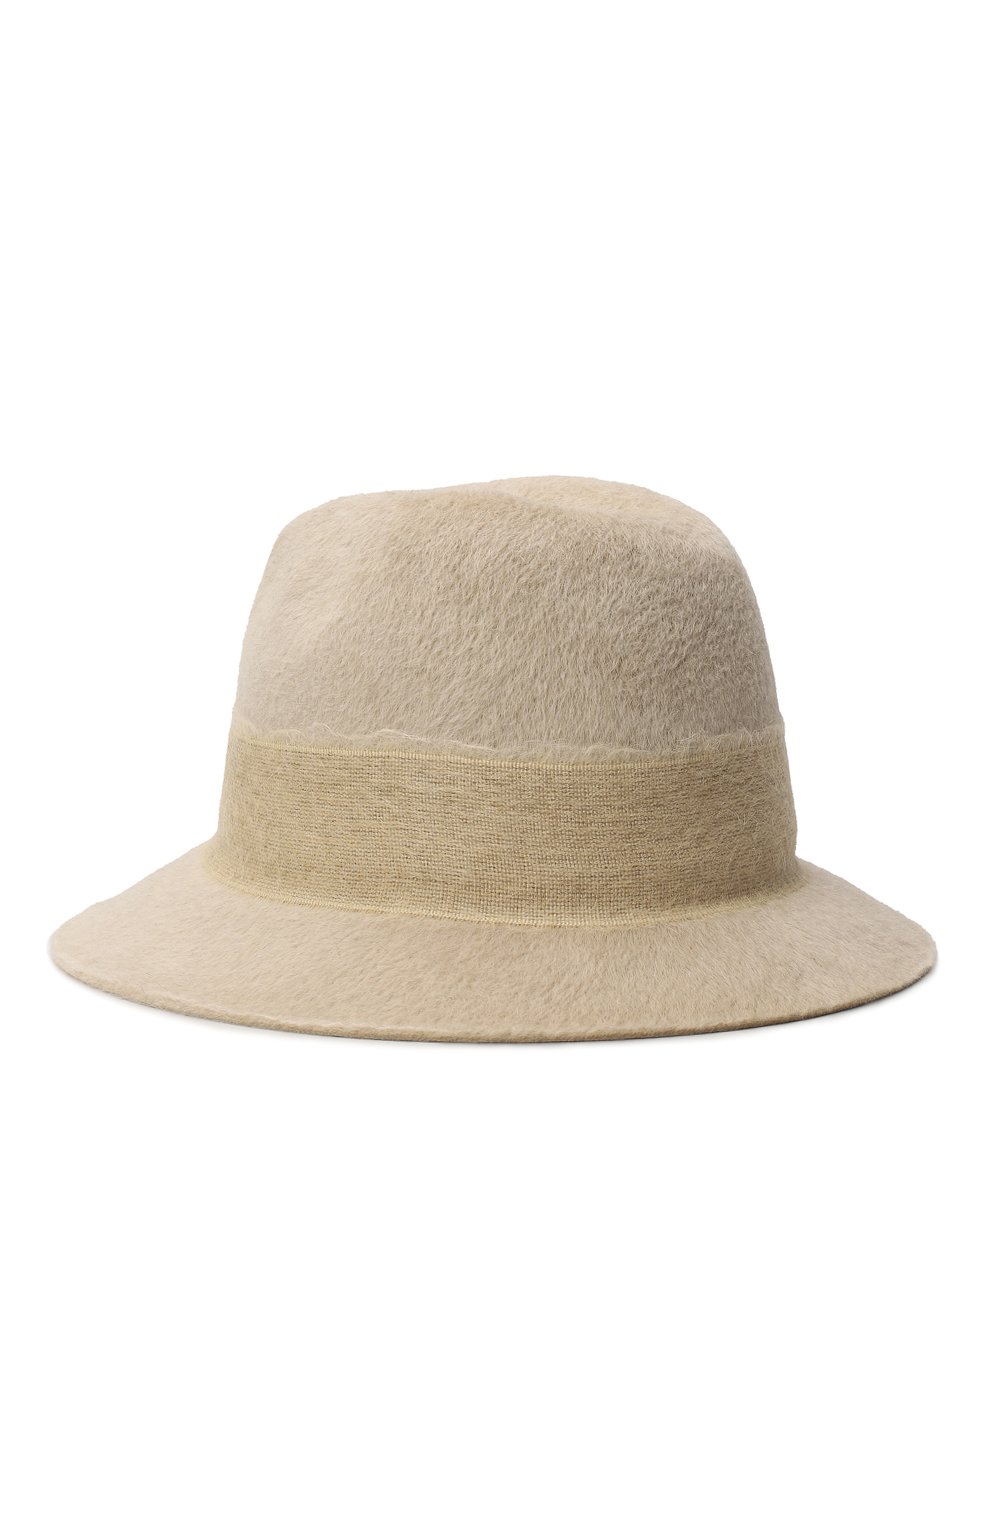 Фетровая шляпа | Loro Piana | Бежевый - 2